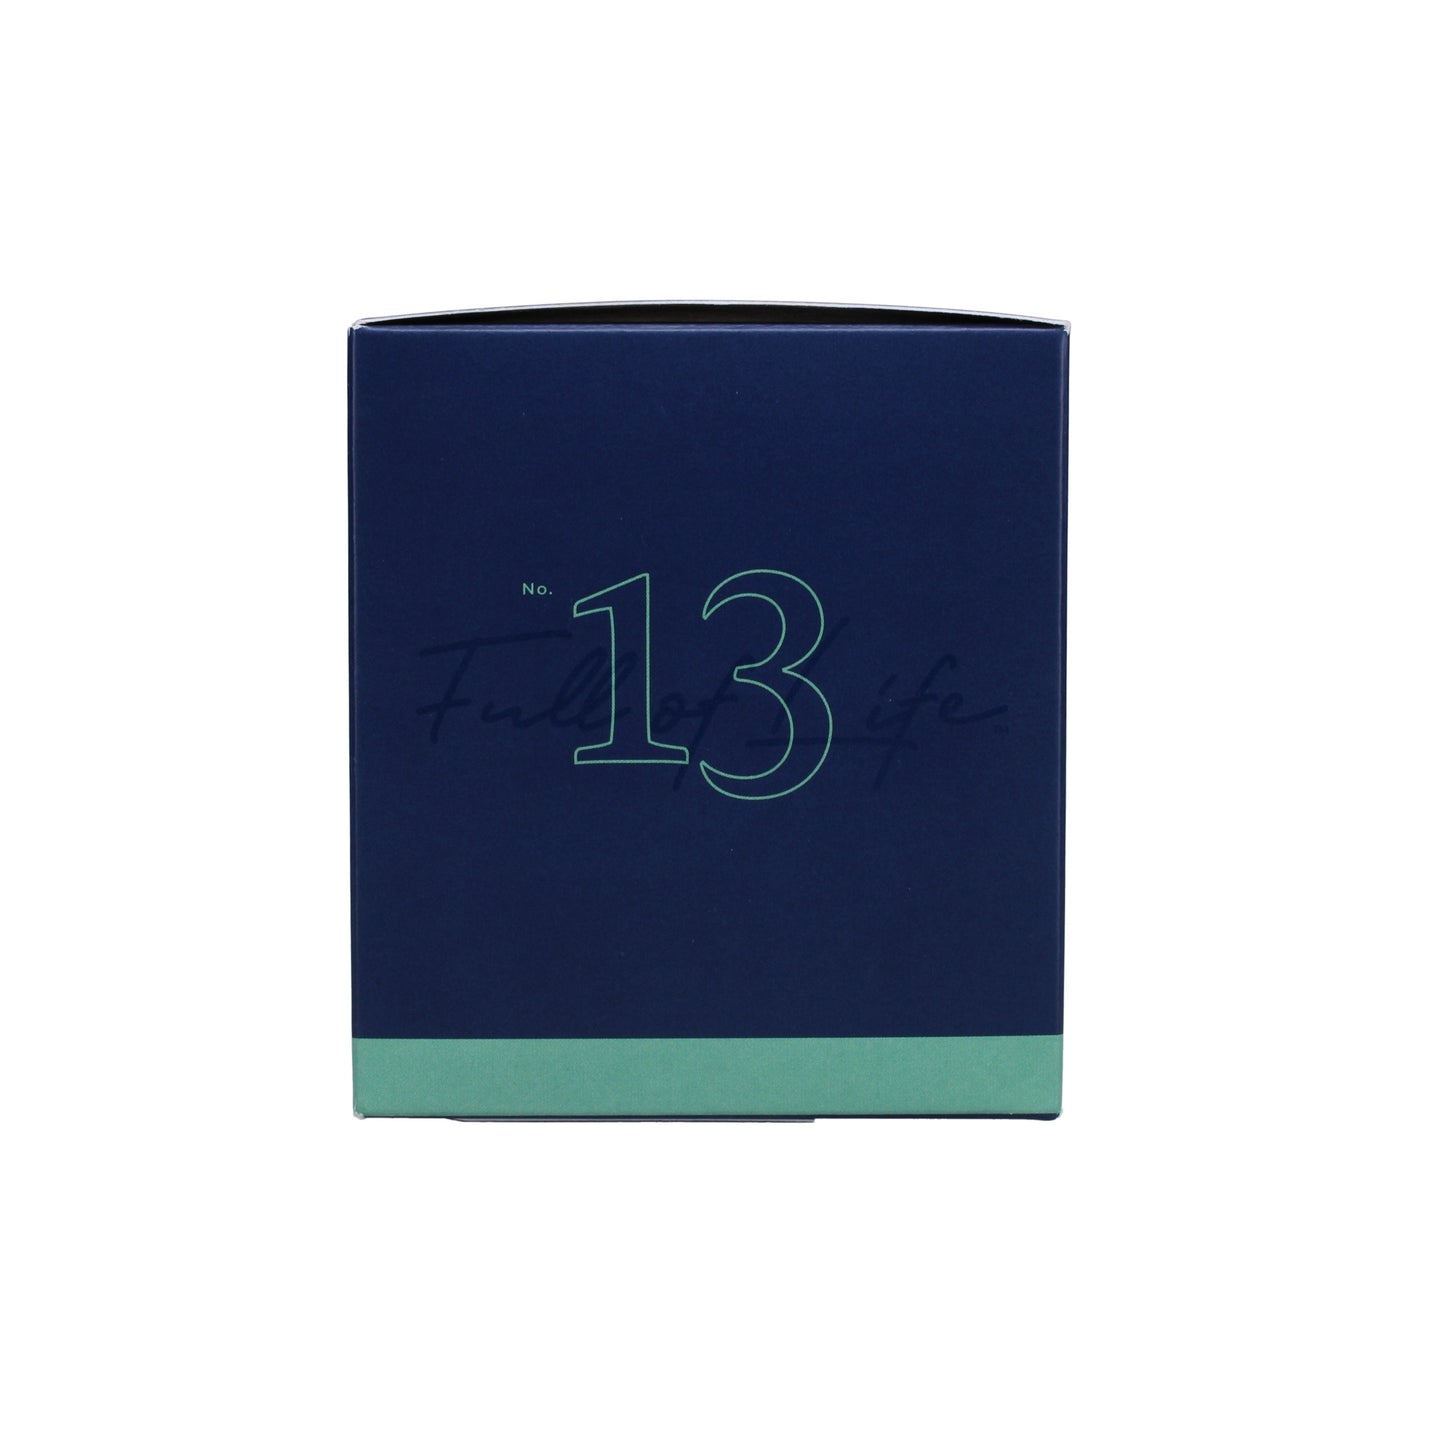 No. 13 Bob's Flower Shoppe 7 oz. Candle in Signature Box Image 6